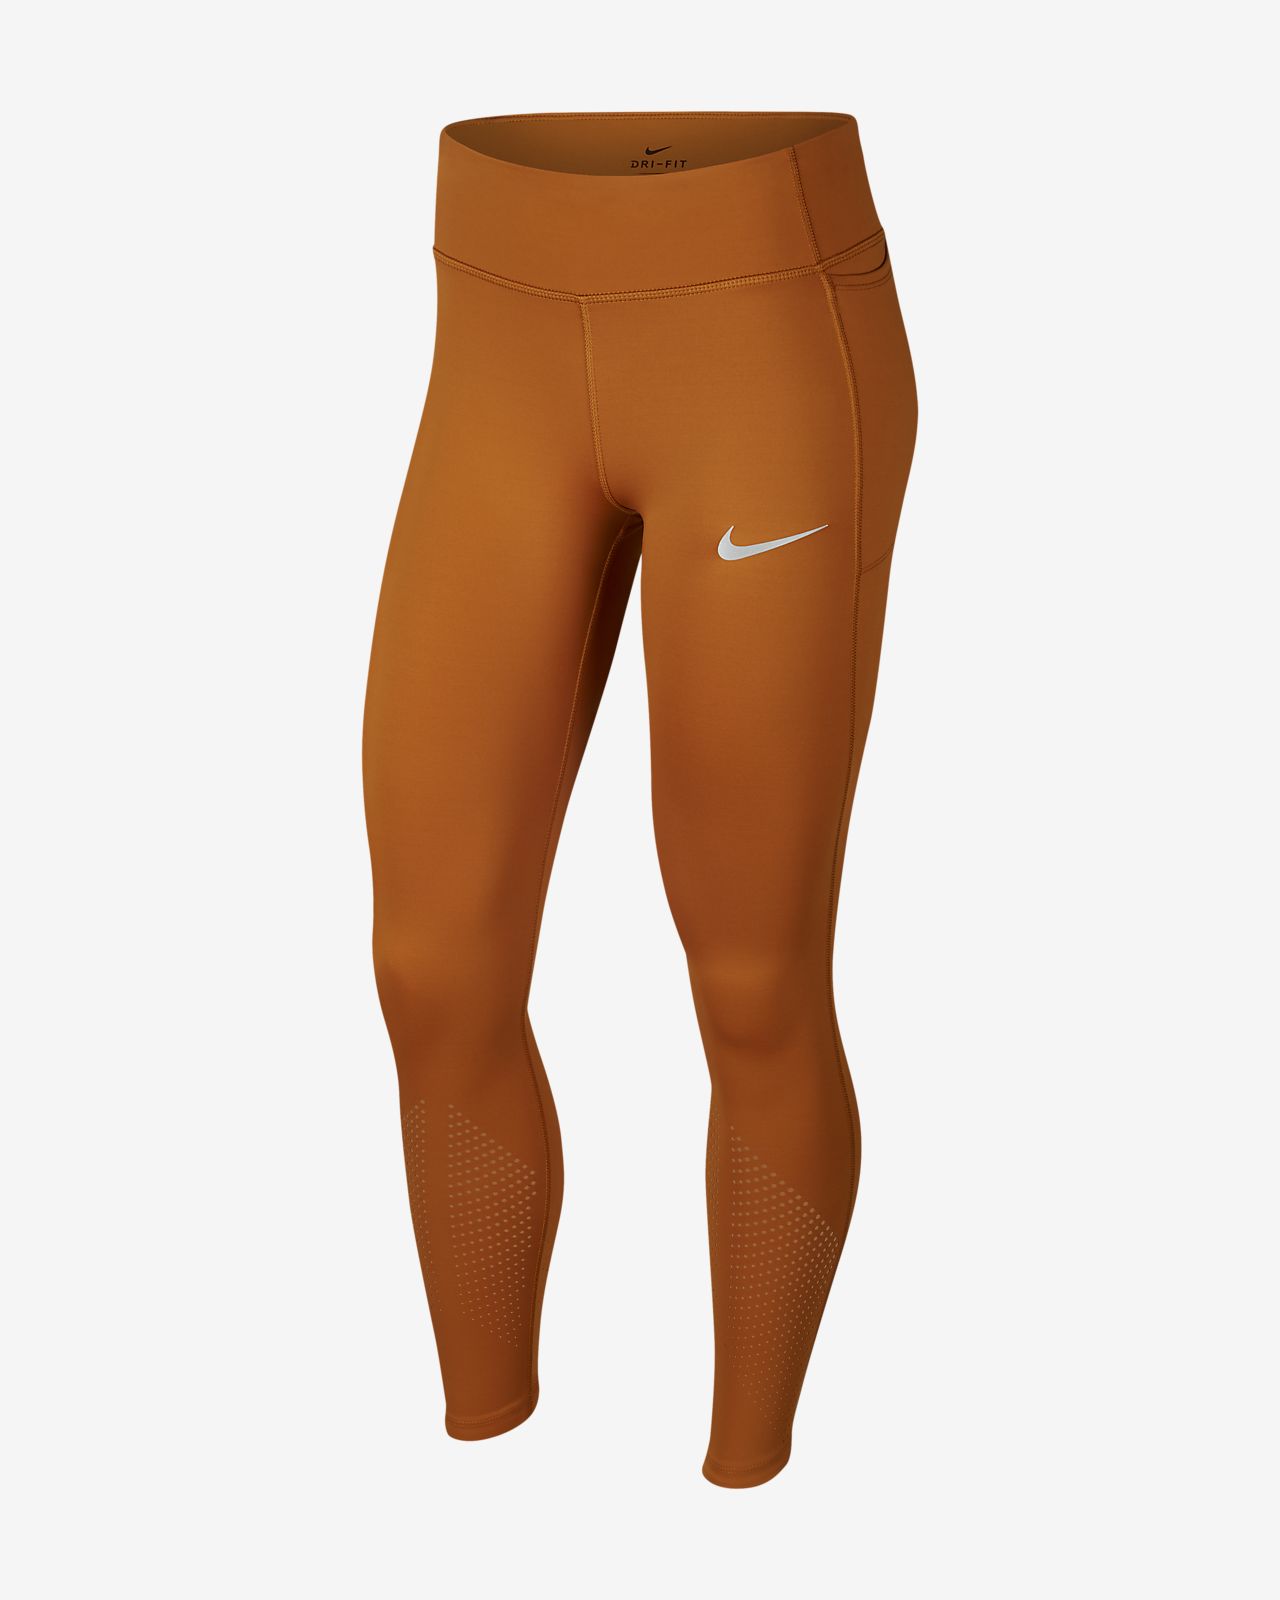 nike burnt orange leggings